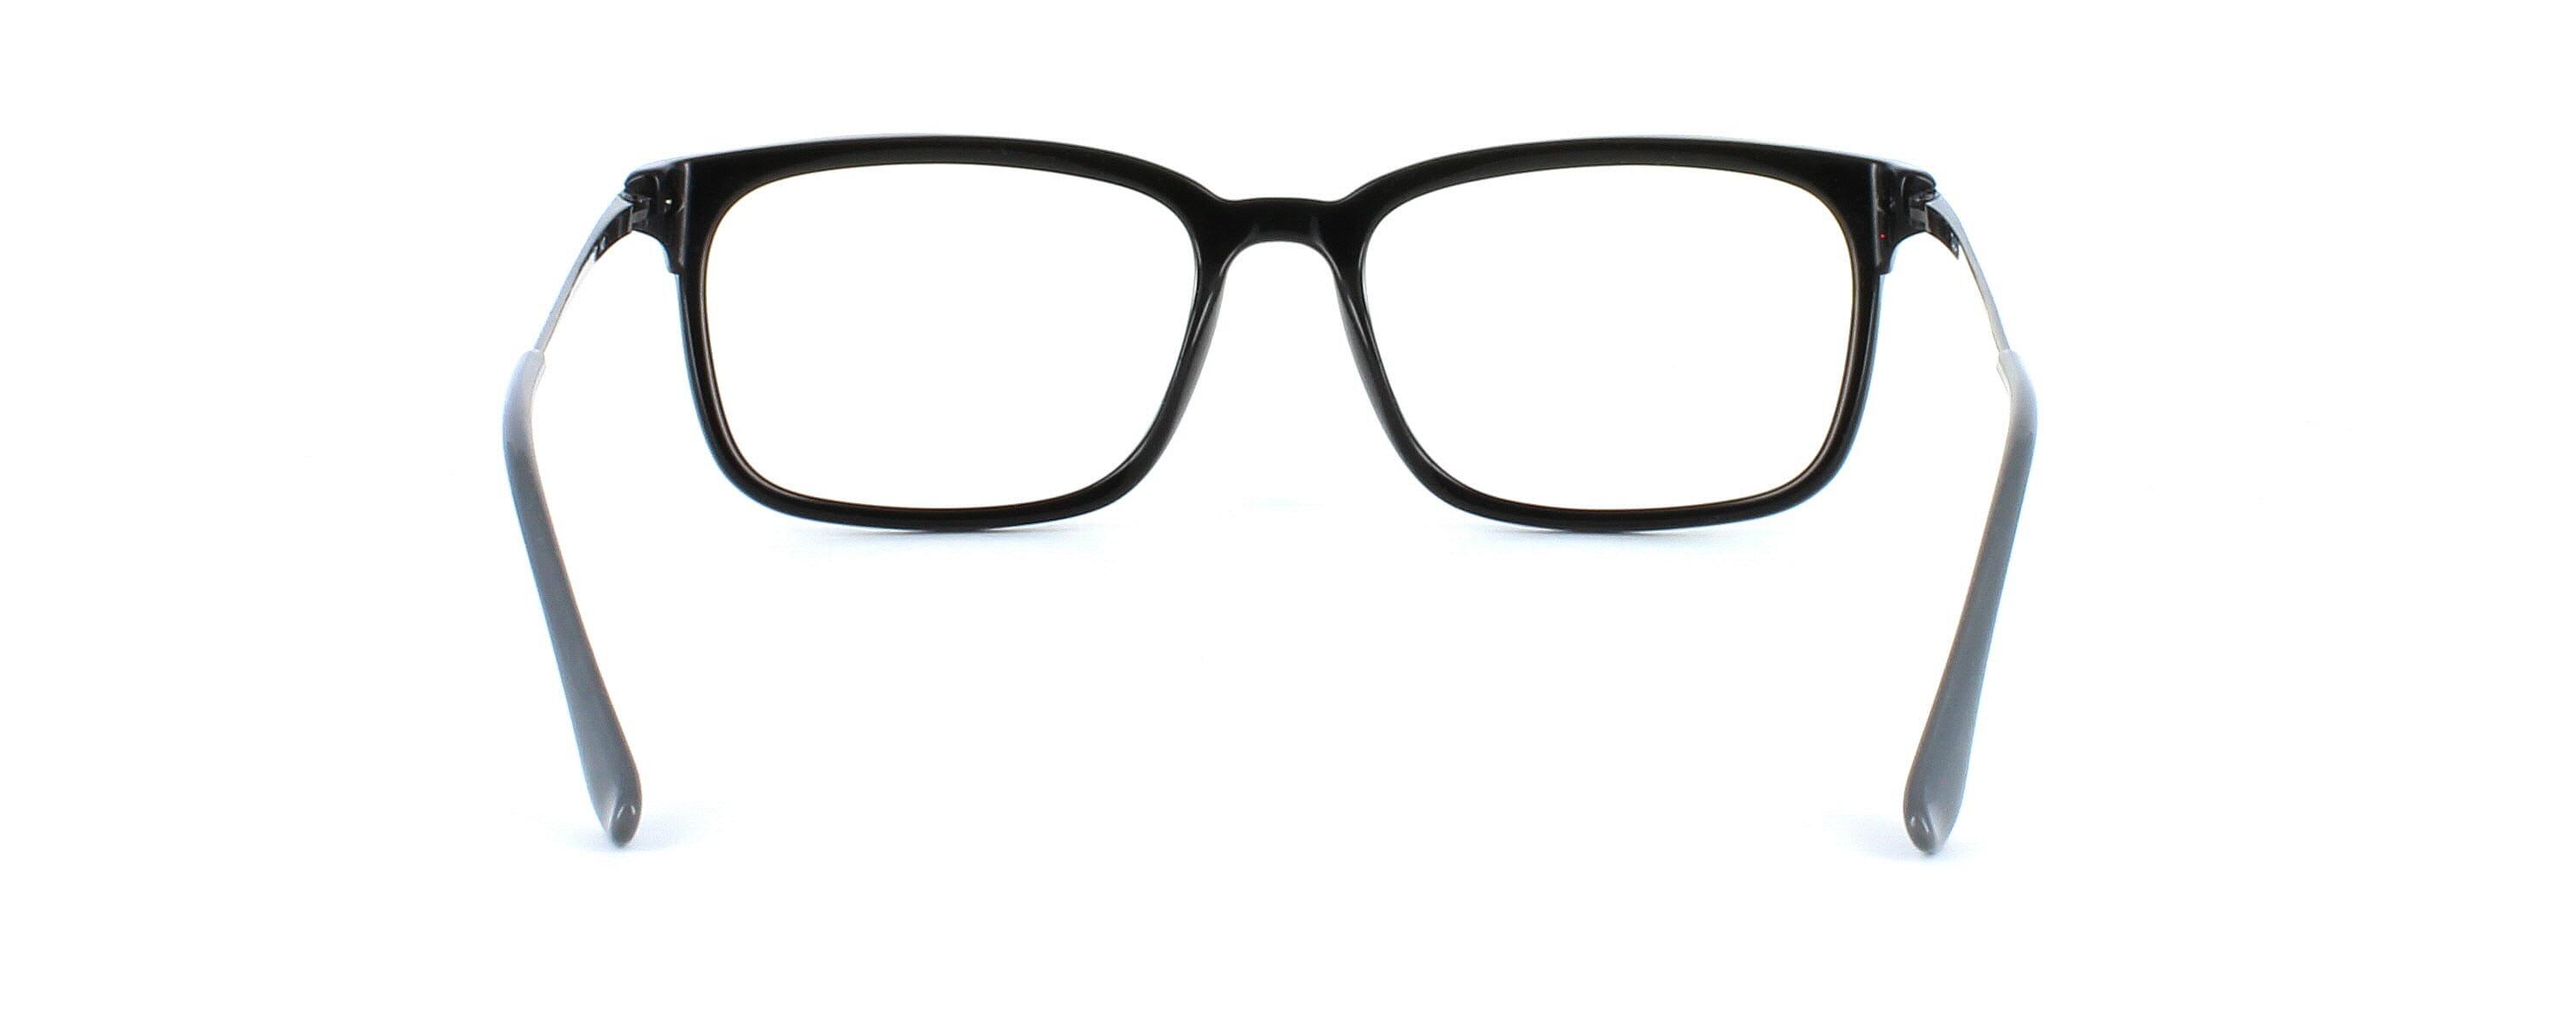 Ray Ban 53641 - Unisex shiny black acetate glasses frame - image view 4